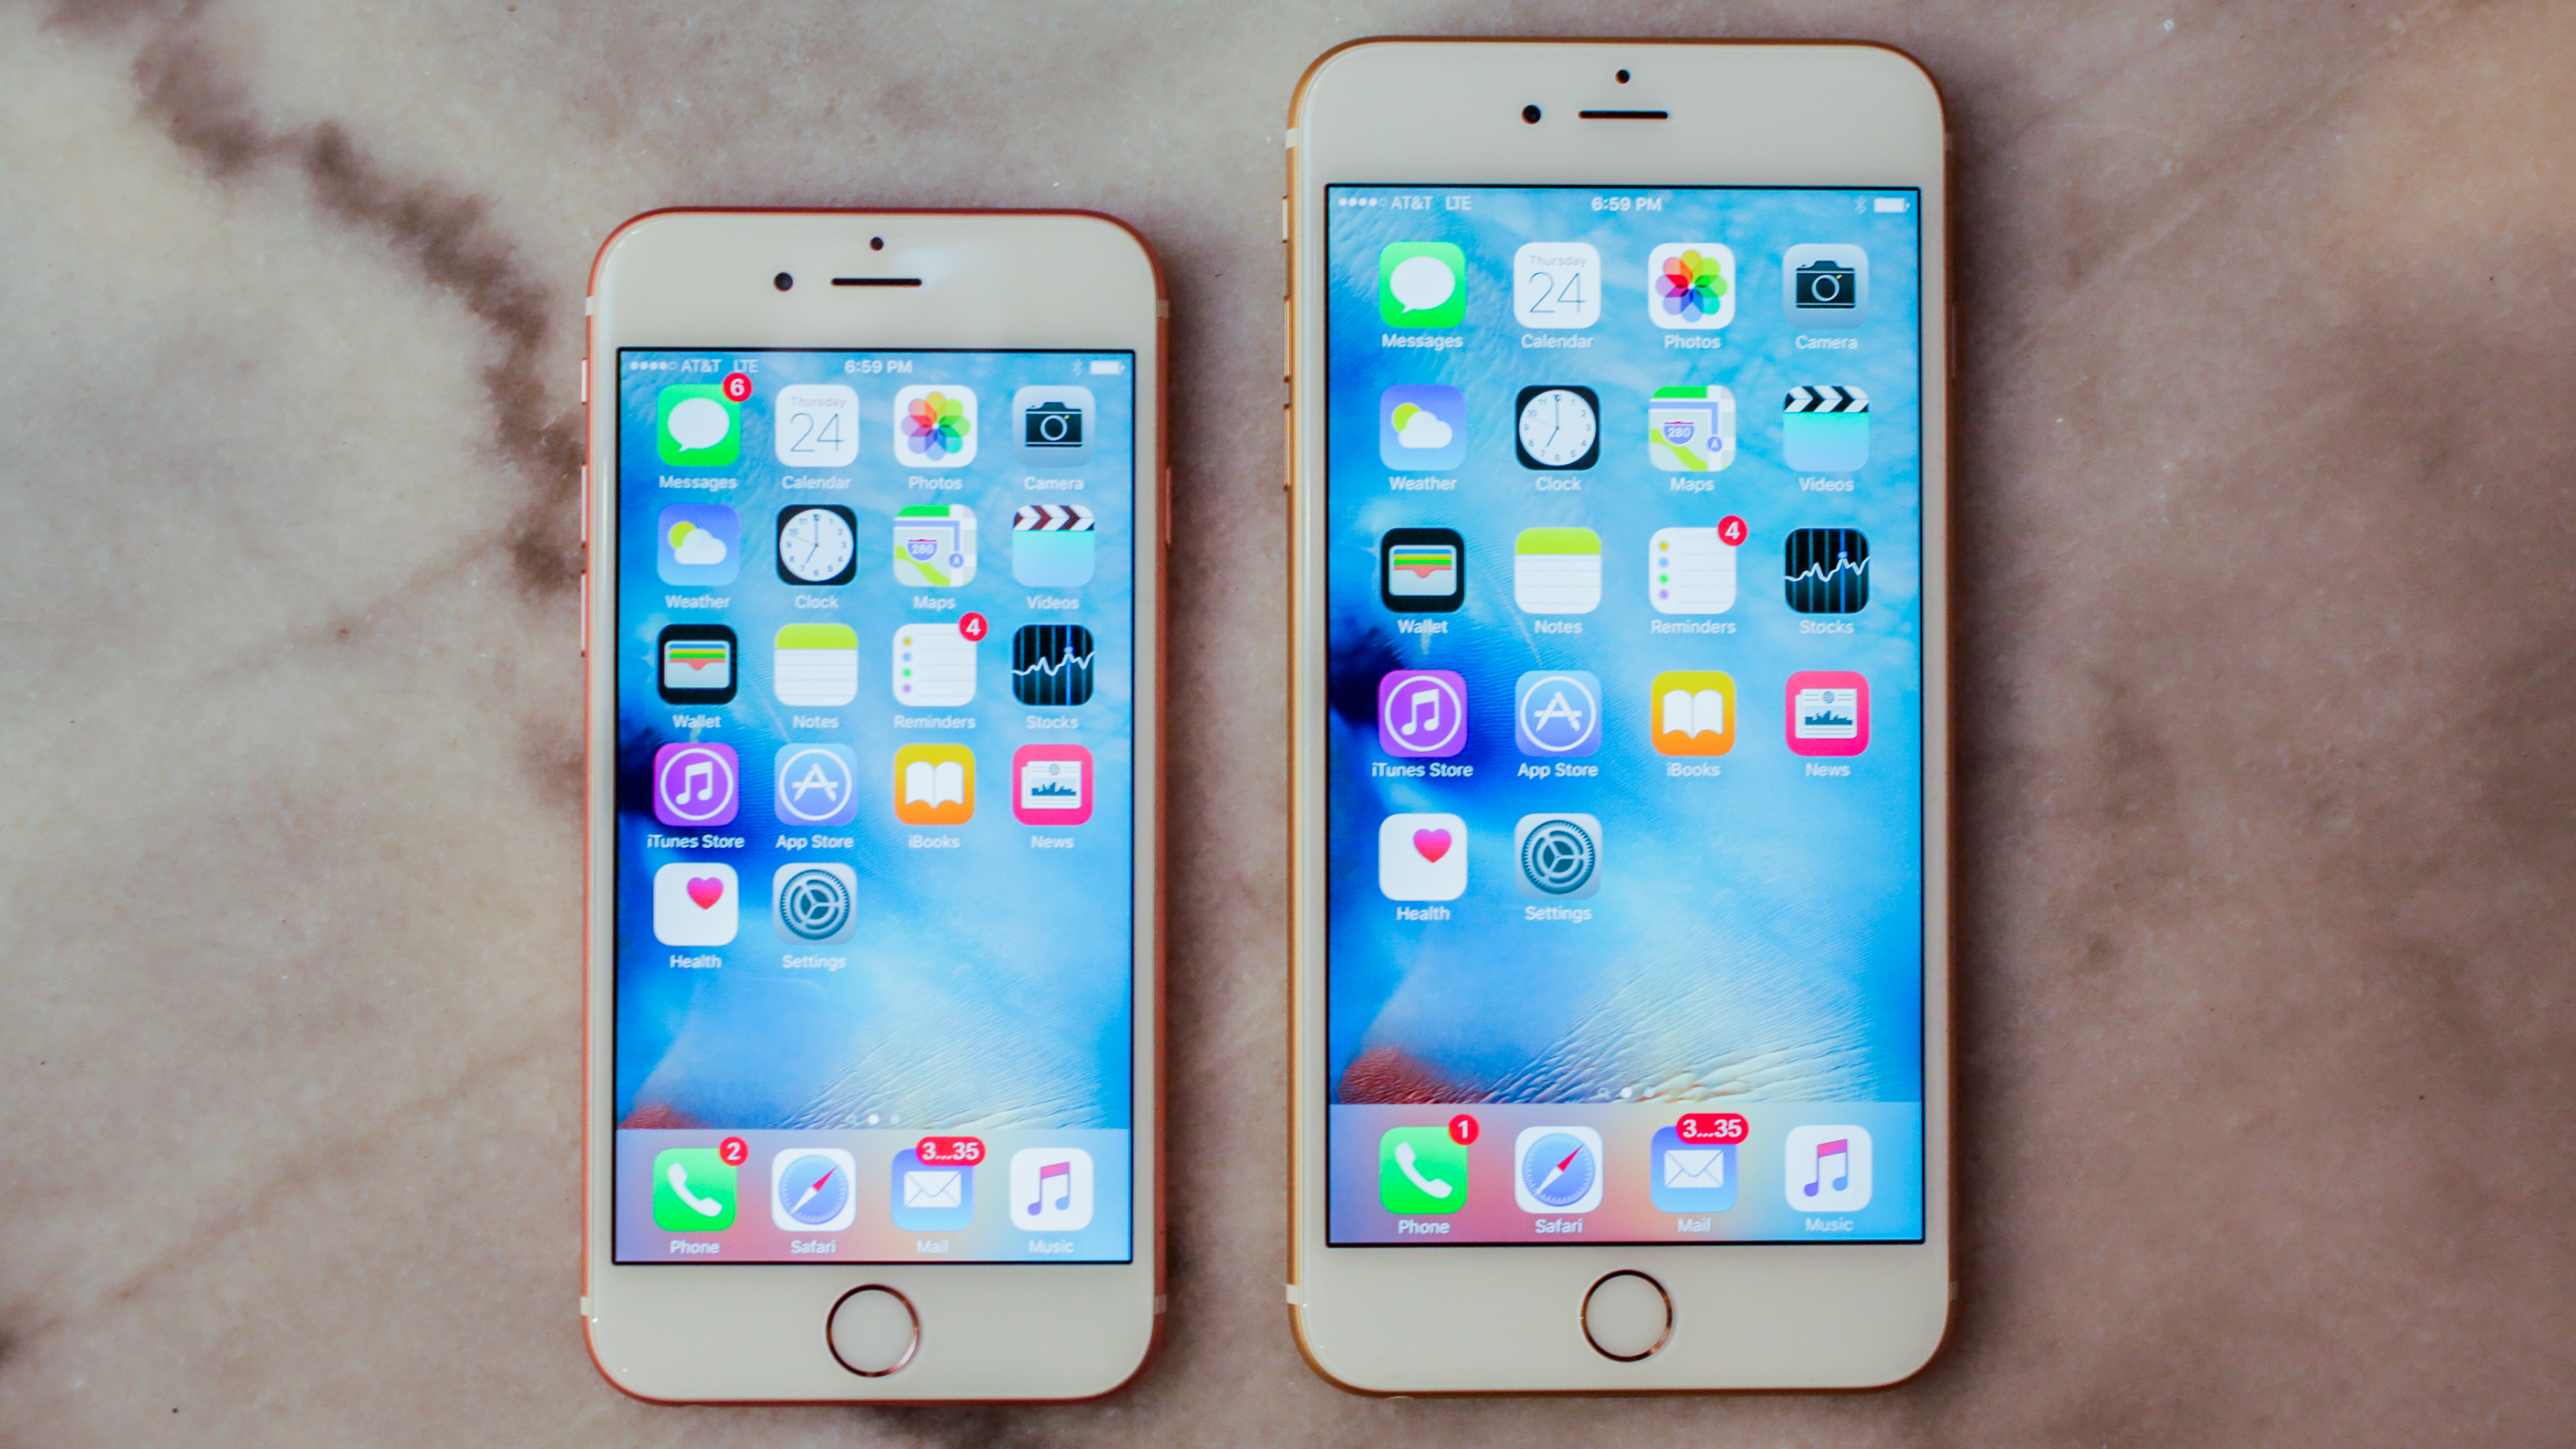 Duwen Arresteren schedel Apple iPhone 6S Plus review: Bigger is (mostly) better - CNET